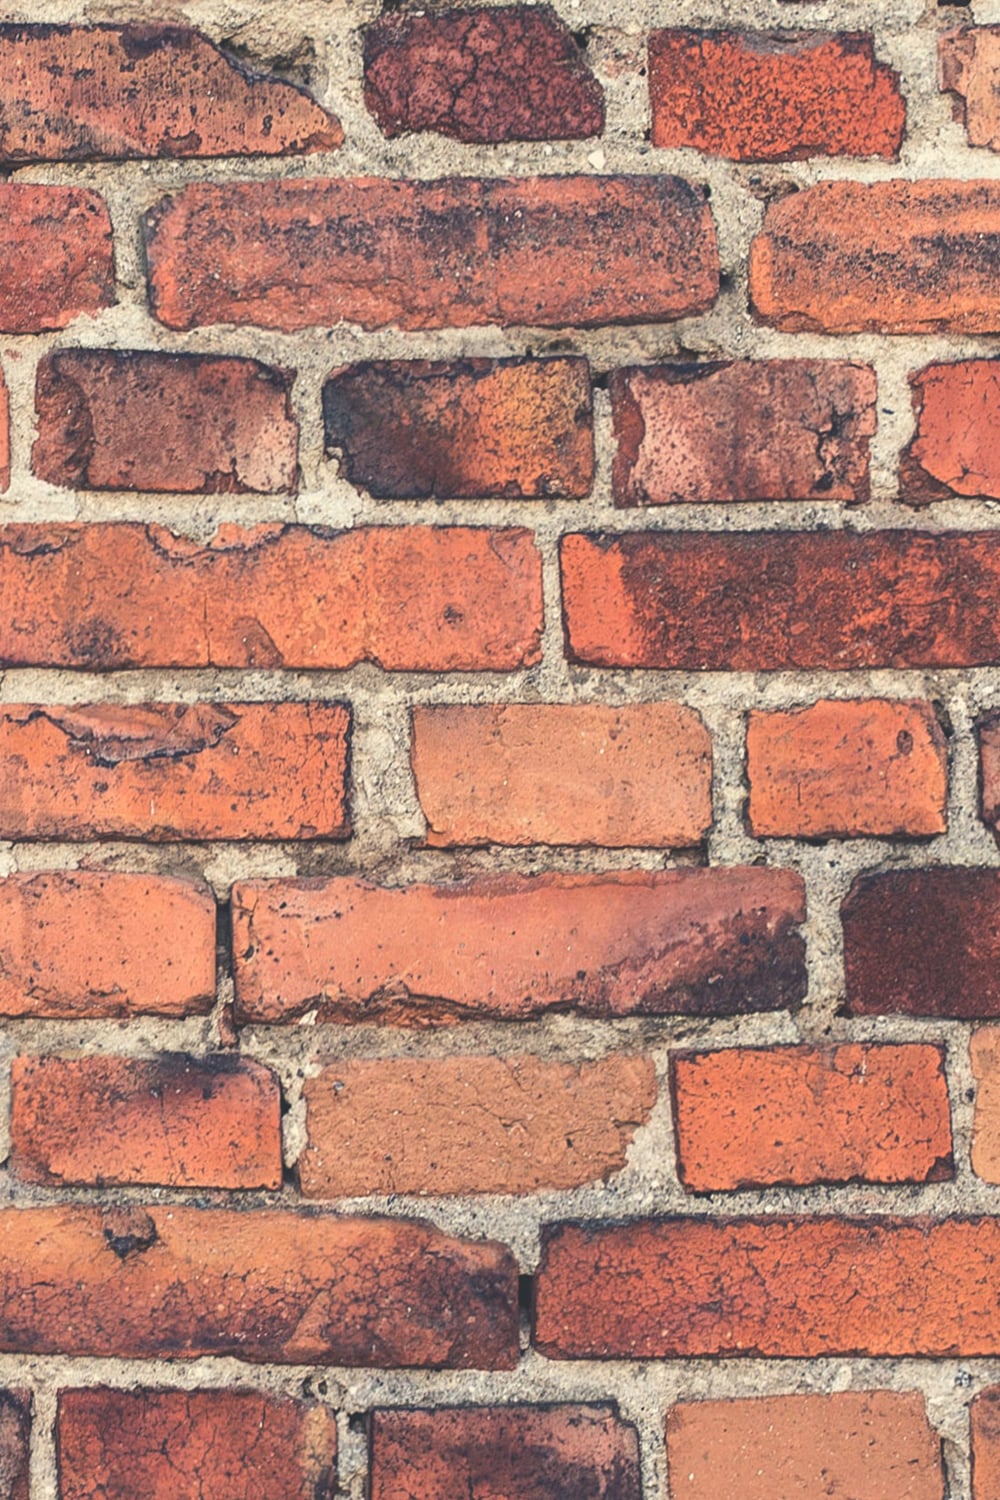 Rustic brick wall close-up